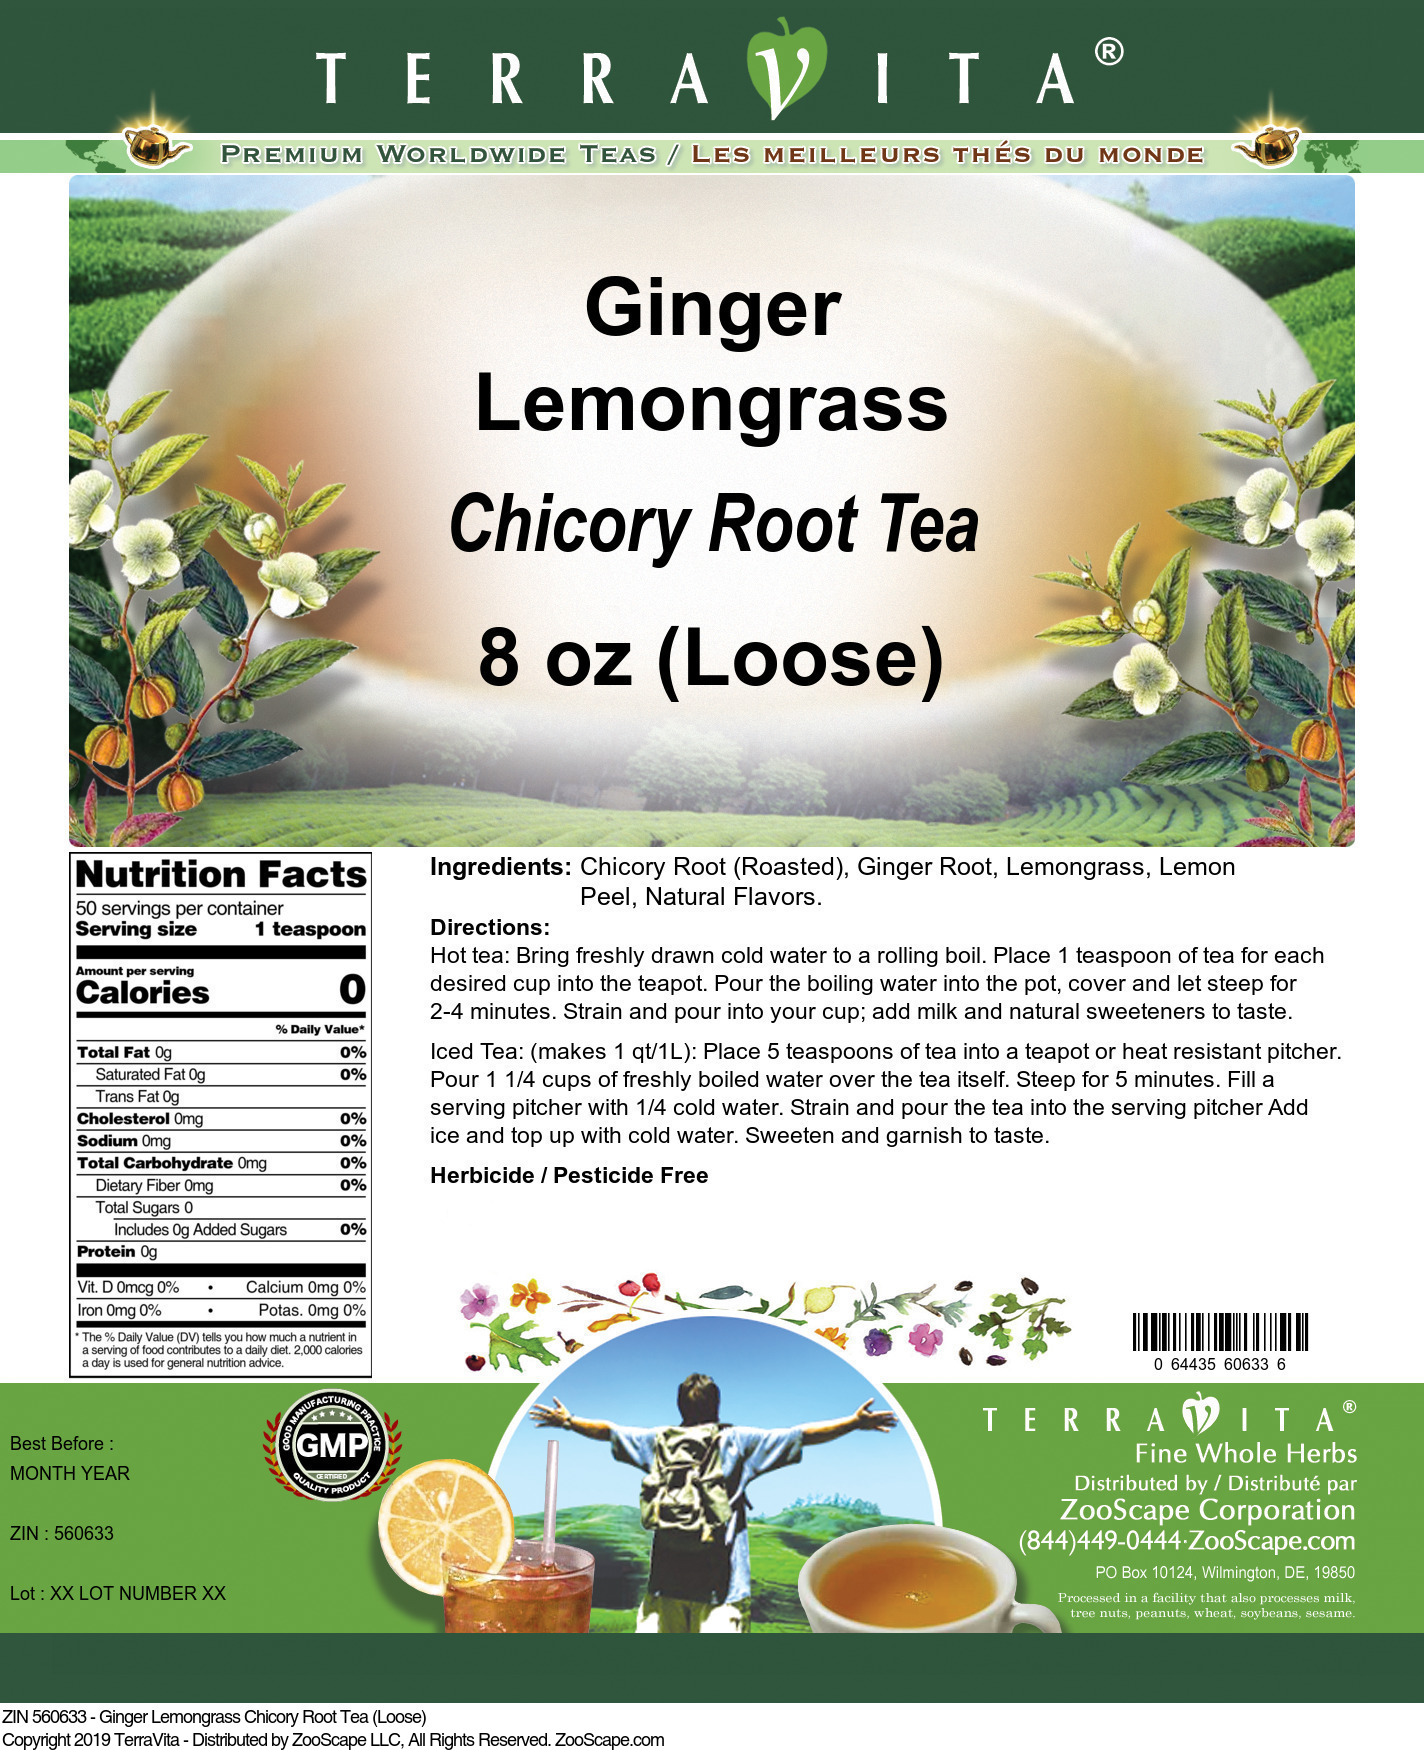 Ginger Lemongrass Chicory Root Tea (Loose) - Label